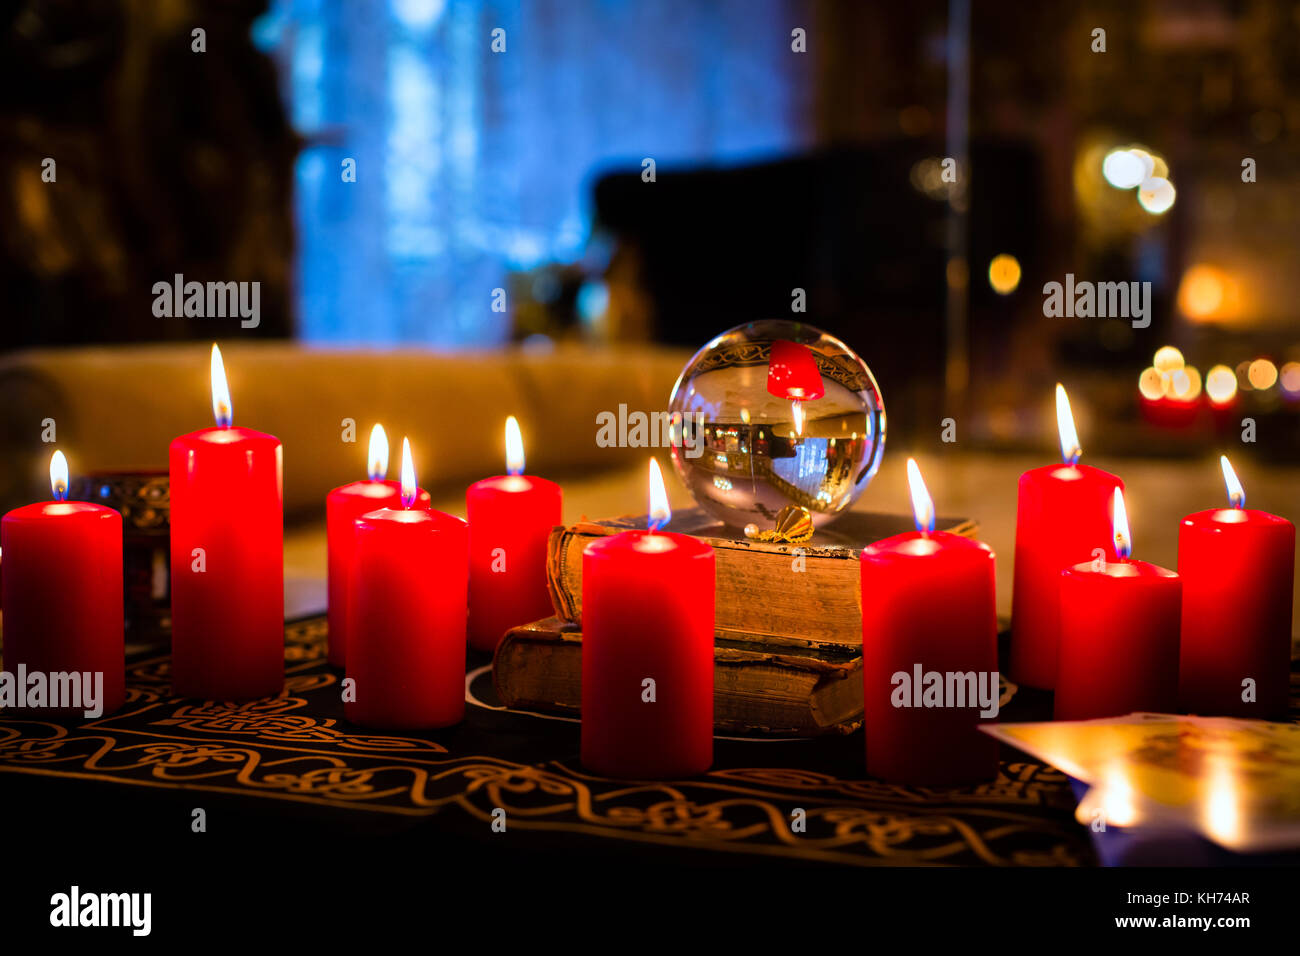 burning seance candles